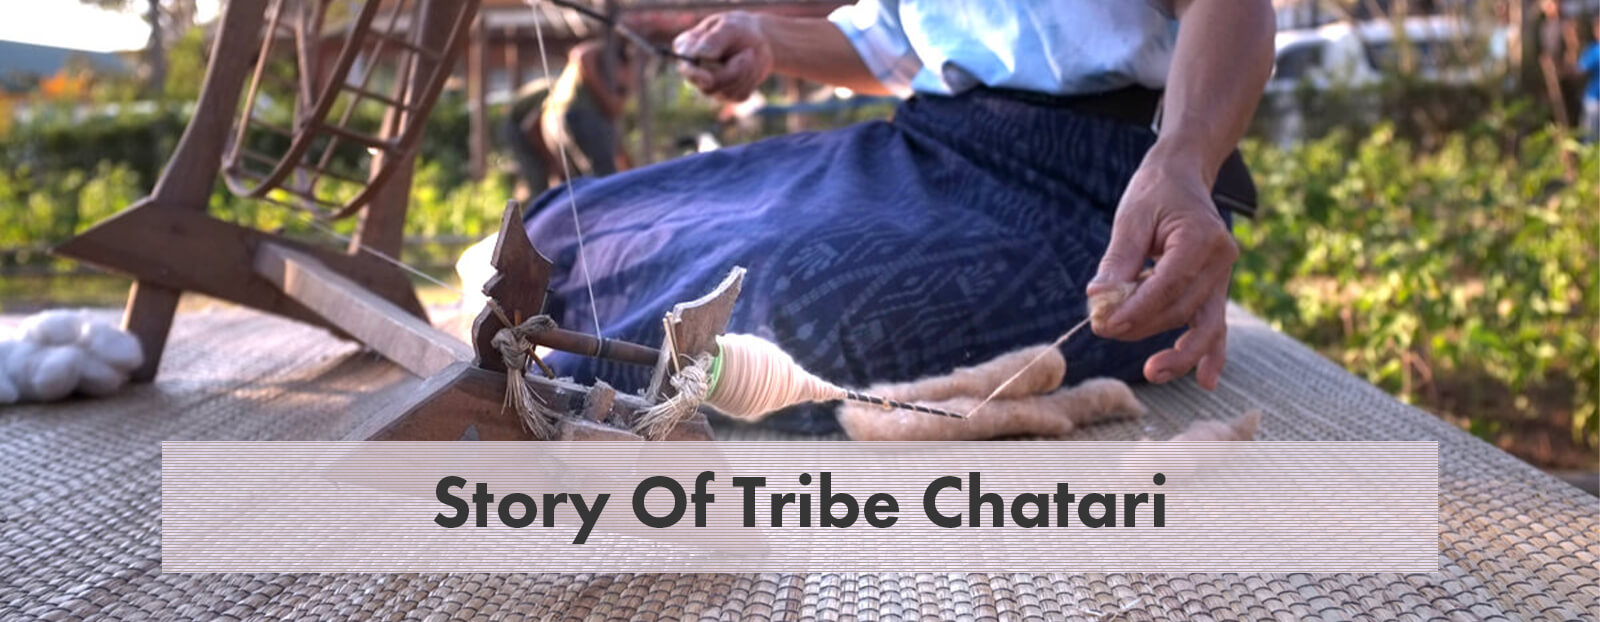 Story Of Tribe Chatari